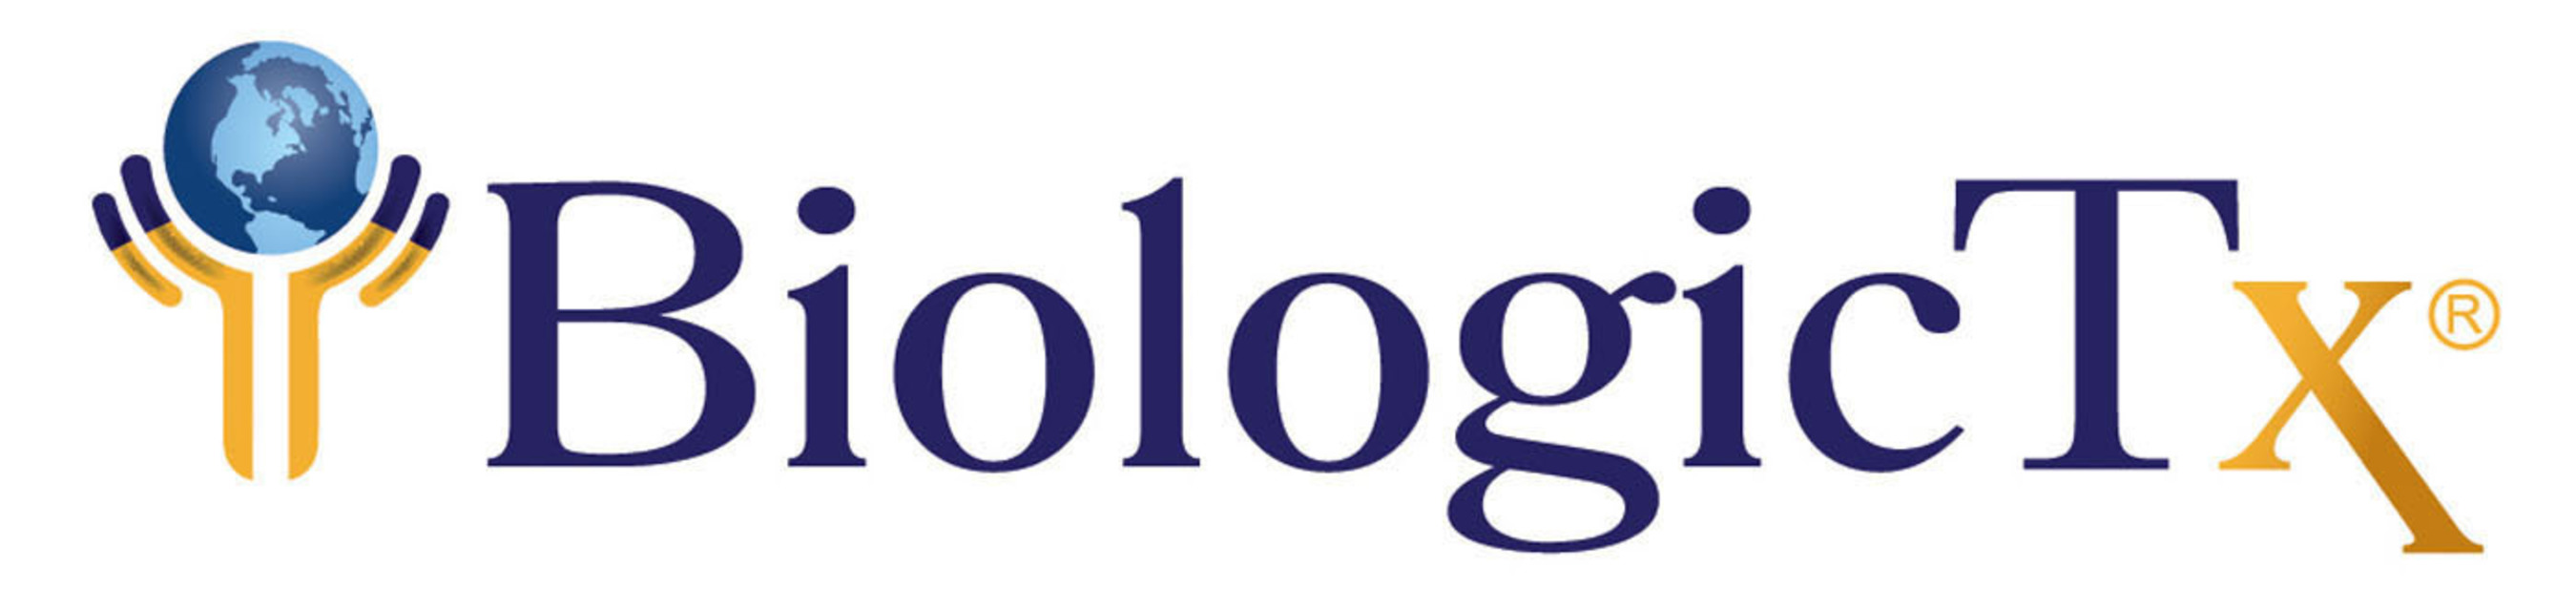 BiologicTx Company Logo. (PRNewsFoto/BiologicTx) (PRNewsFoto/) (PRNewsFoto/BiologicTx)